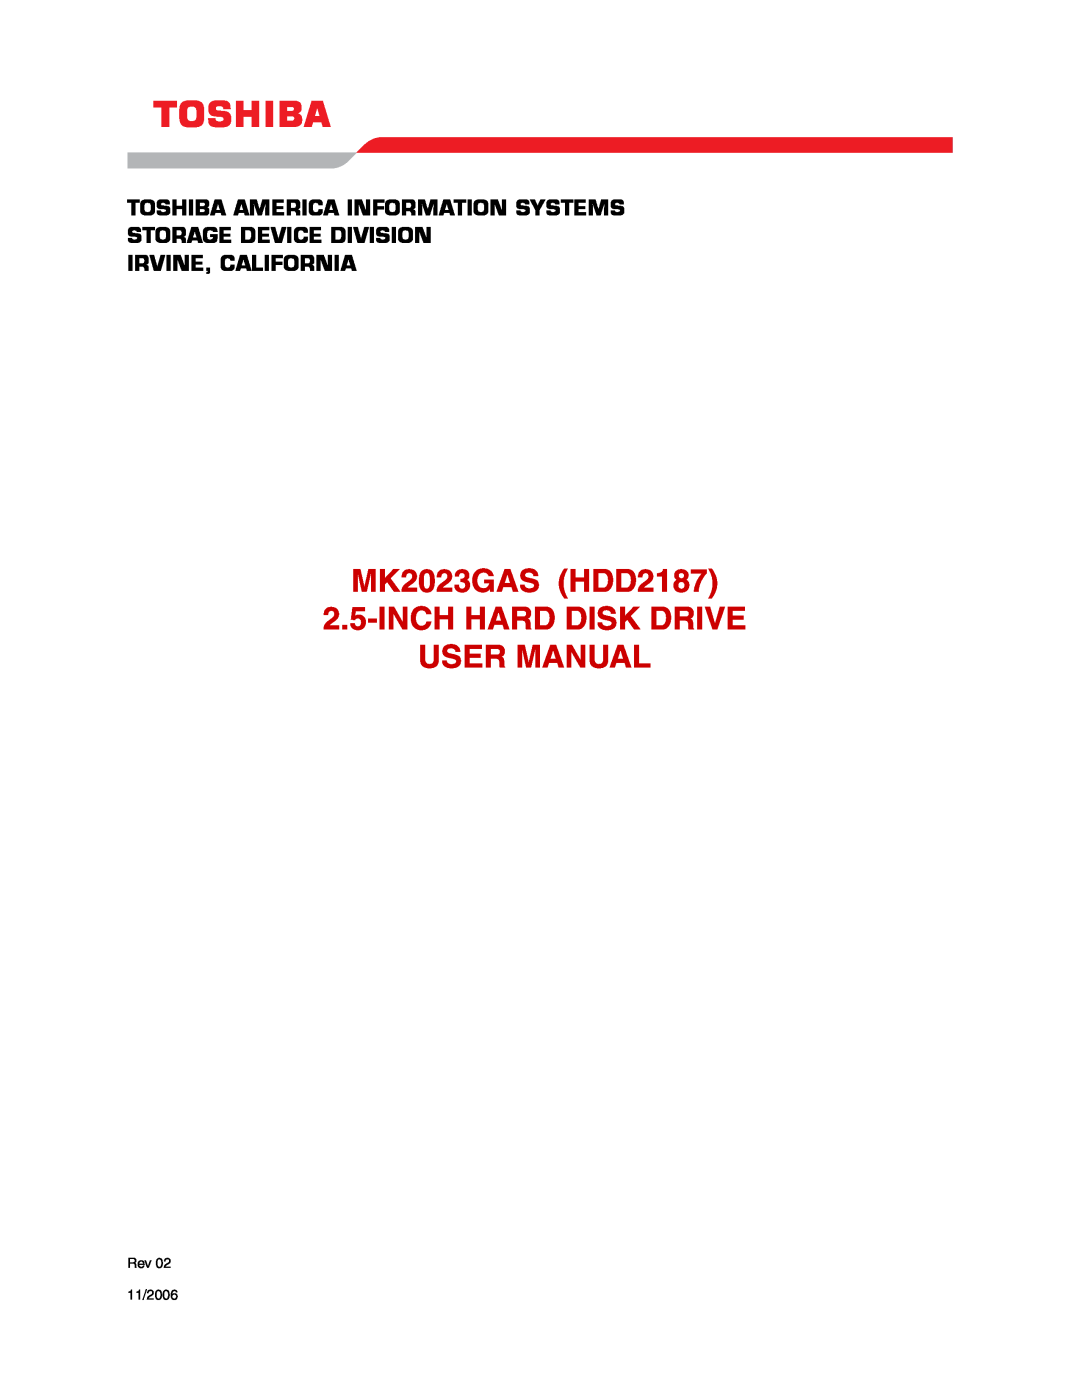 Toshiba user manual MK2023GAS HDD2187 2.5-INCH HARD DISK DRIVE USER MANUAL, Irvine, California, Rev 11/2006 